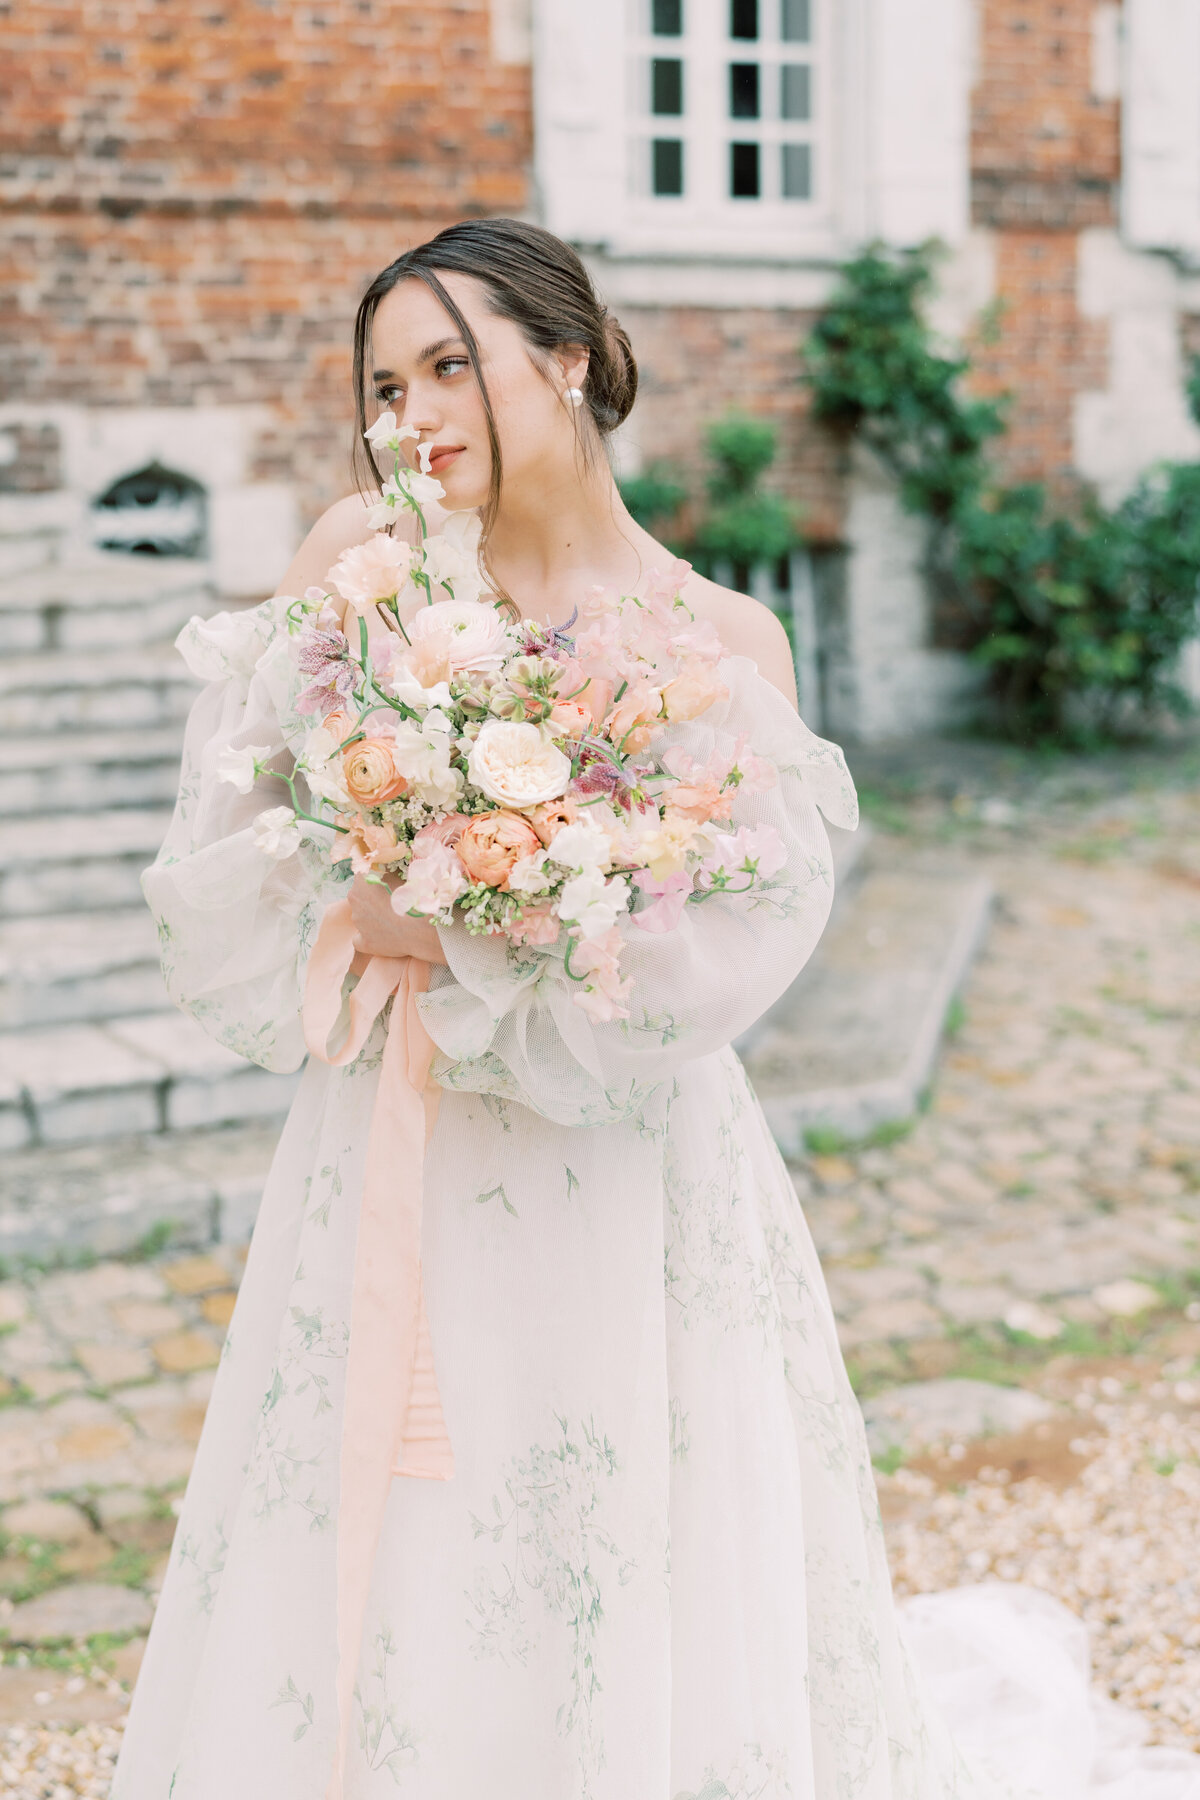 Sarah Rae Floral Designs Wedding Event Florist Flowers Kentucky Chic Whimsical Romantic Weddings73